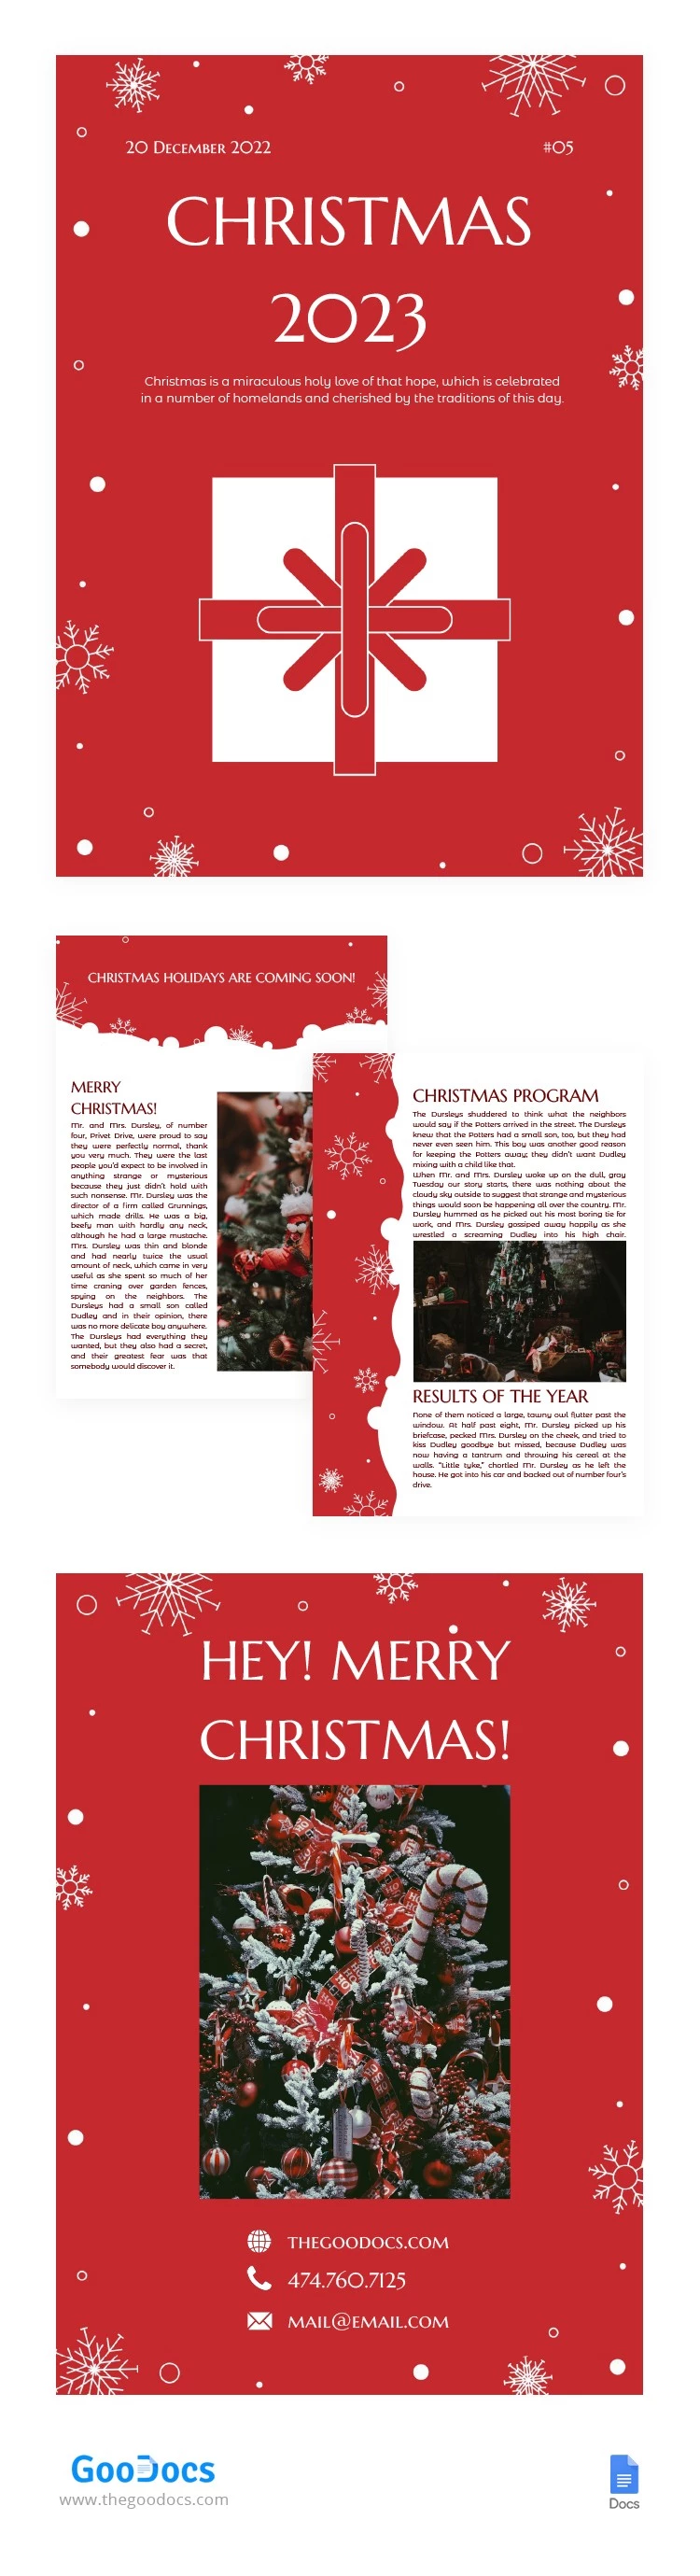 Boletín navideño minimalista en rojo - free Google Docs Template - 10064797